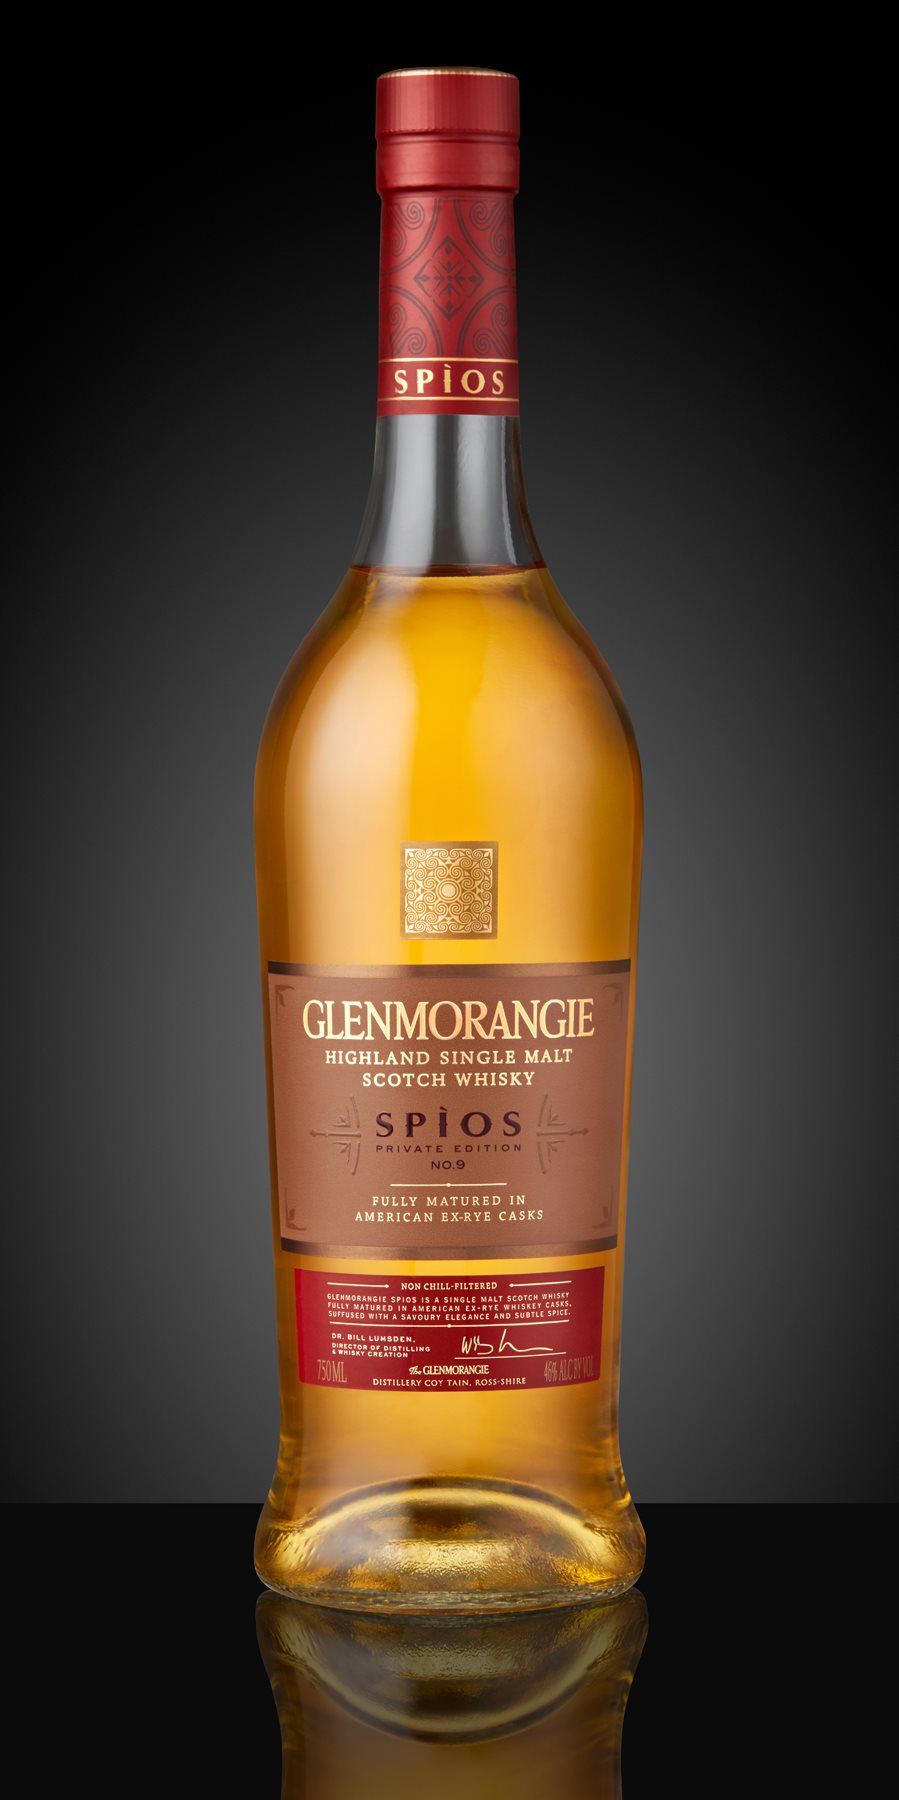 Glenmorangie Private Edition 9 Spios_Bottle on Black background